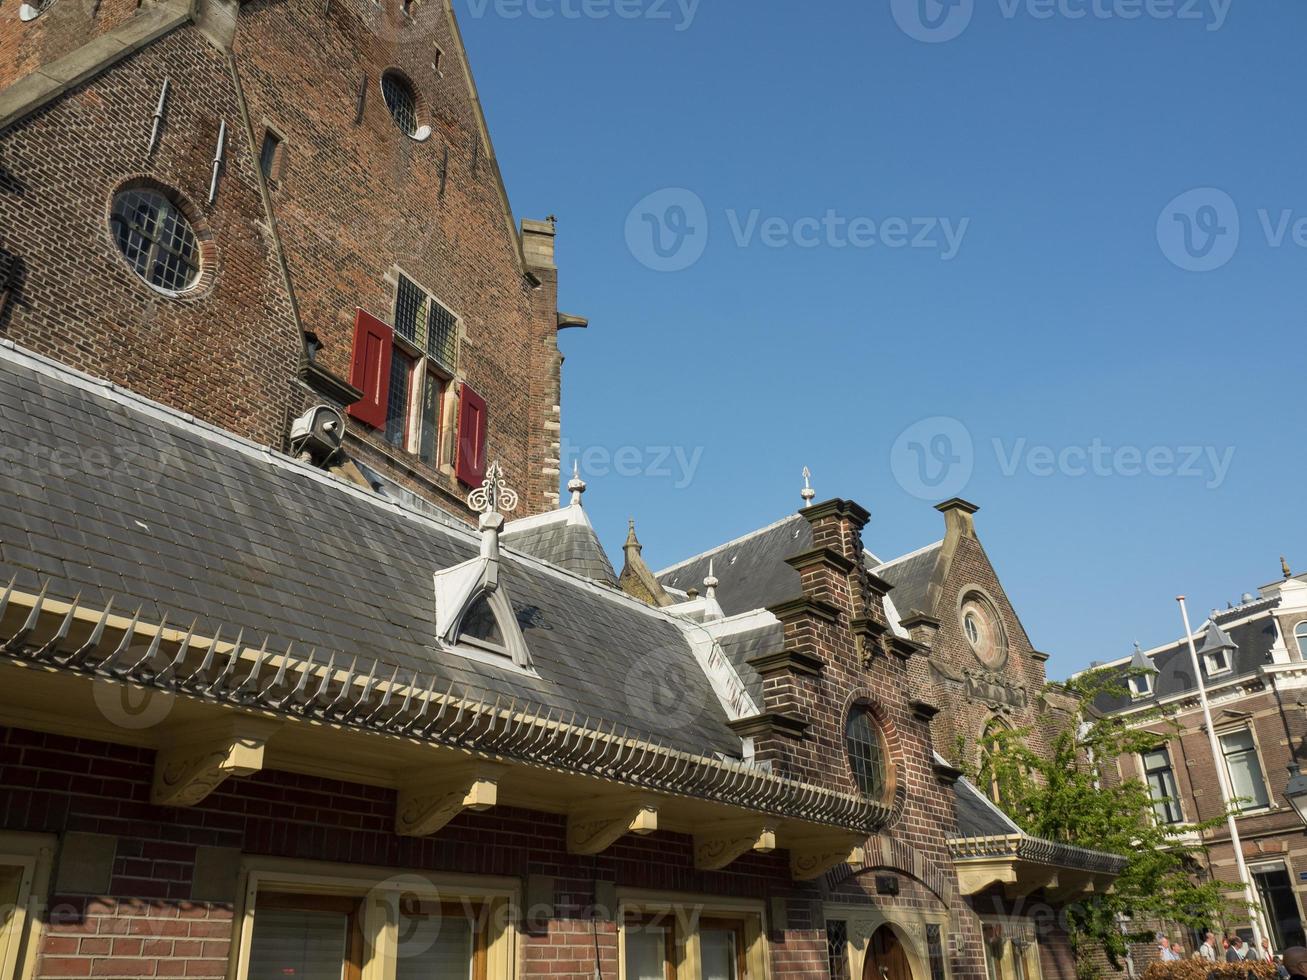 de stad haarlem in nederland foto